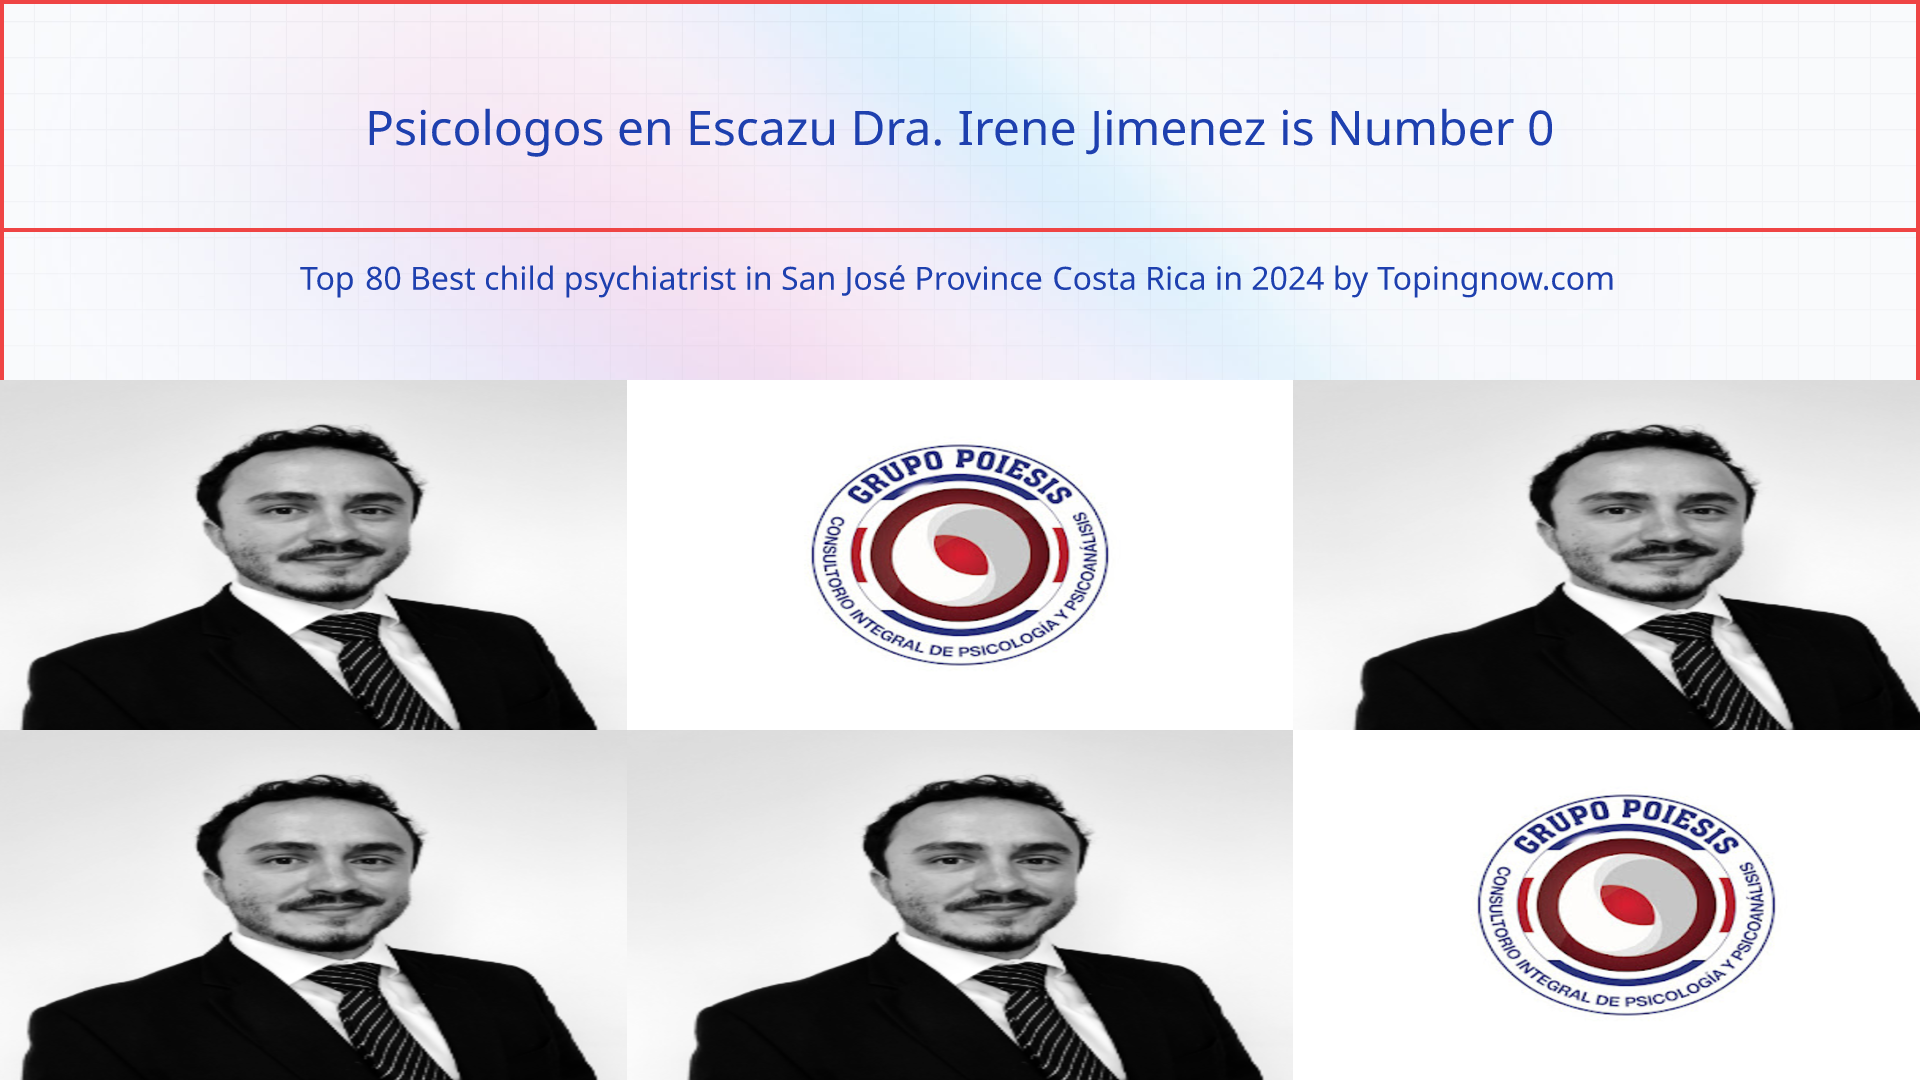 Psicologos en Escazu Dra. Irene Jimenez: Top 80 Best child psychiatrist in San José Province Costa Rica in 2024